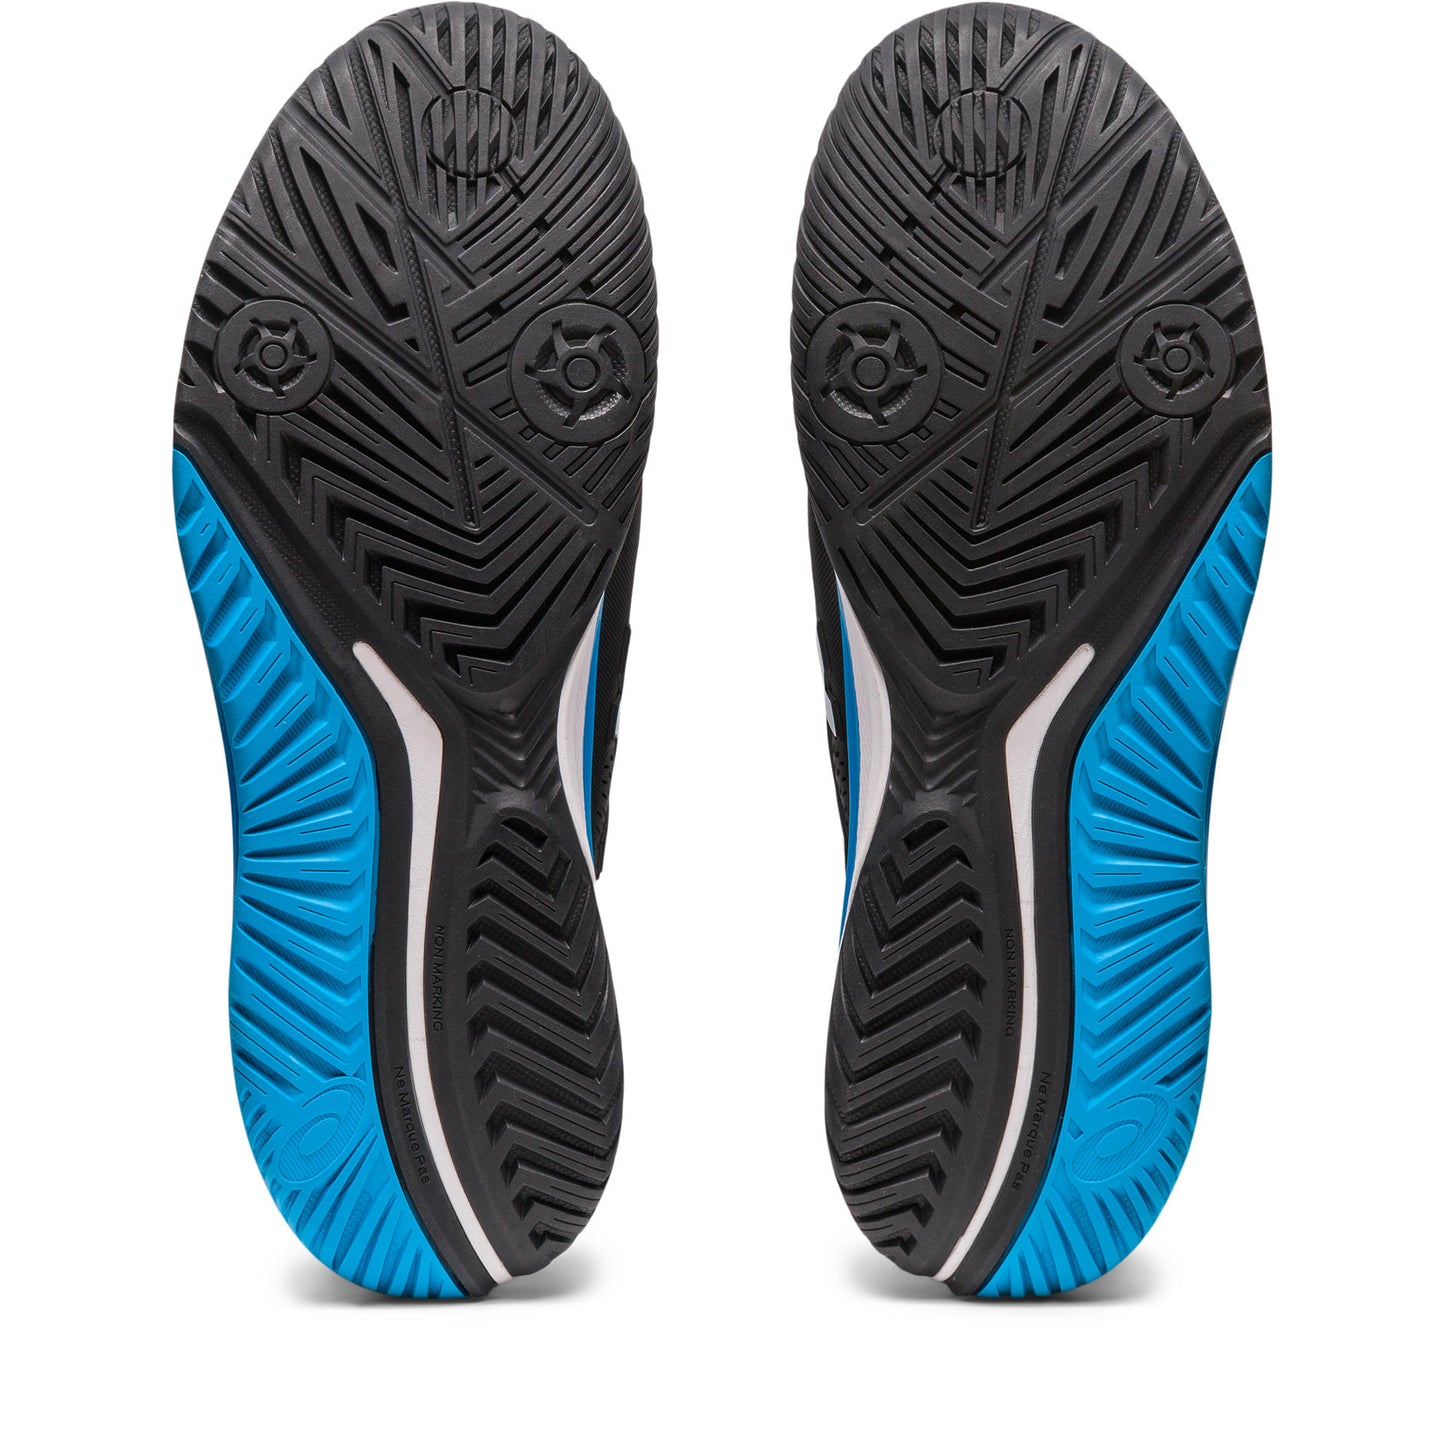 Asics Gel Resolution 9 Men tennis shoes - Black/Blue 330.001